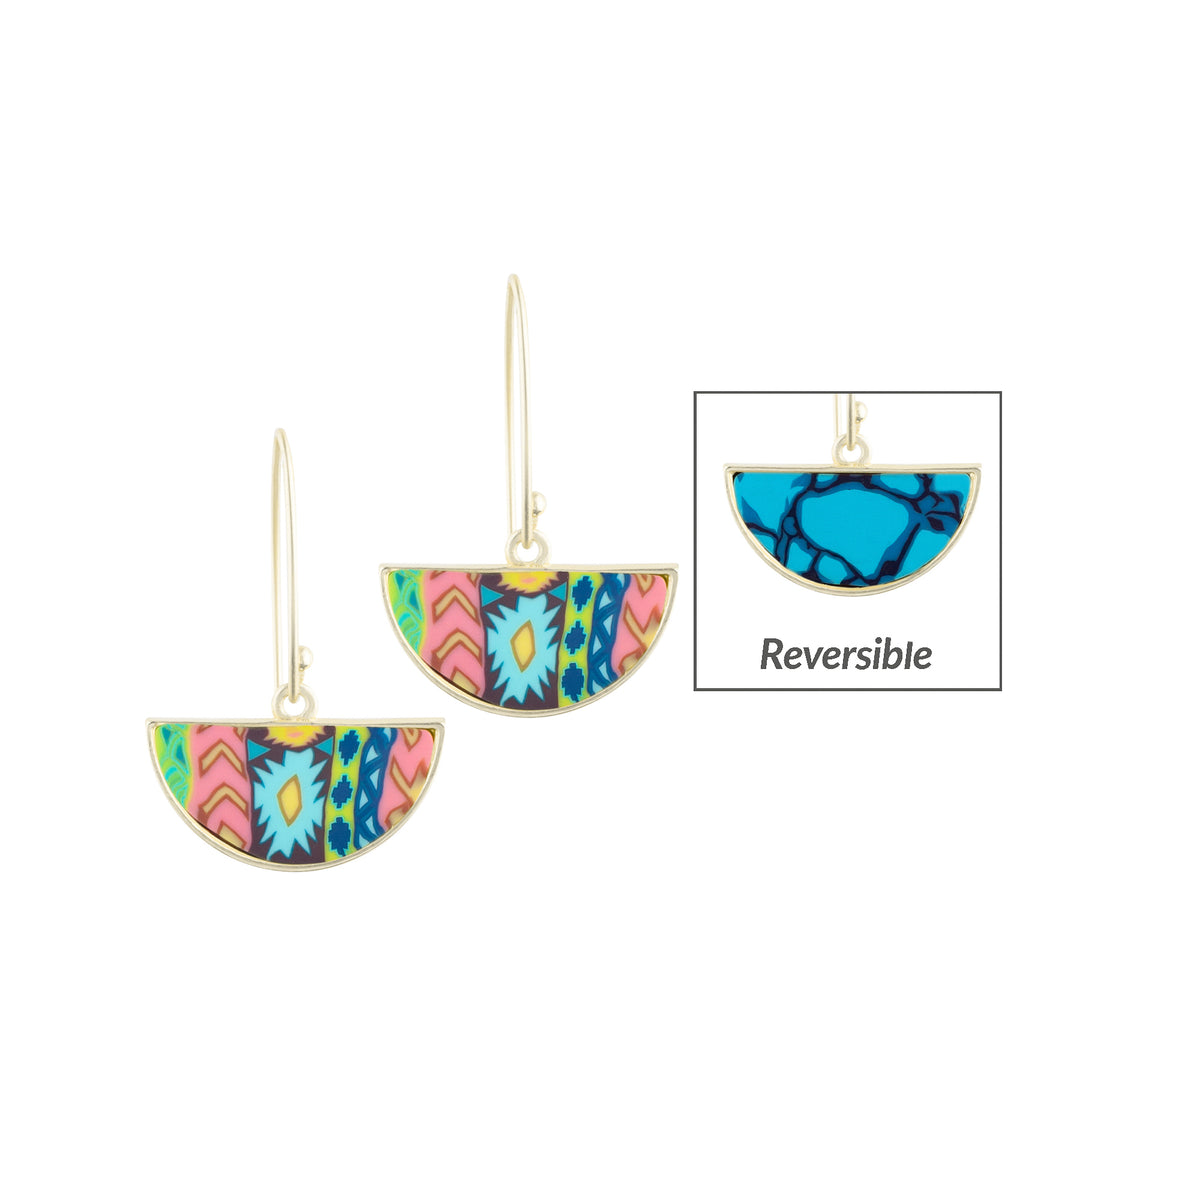 Sedona Sky Reversible Half Shell Earrings